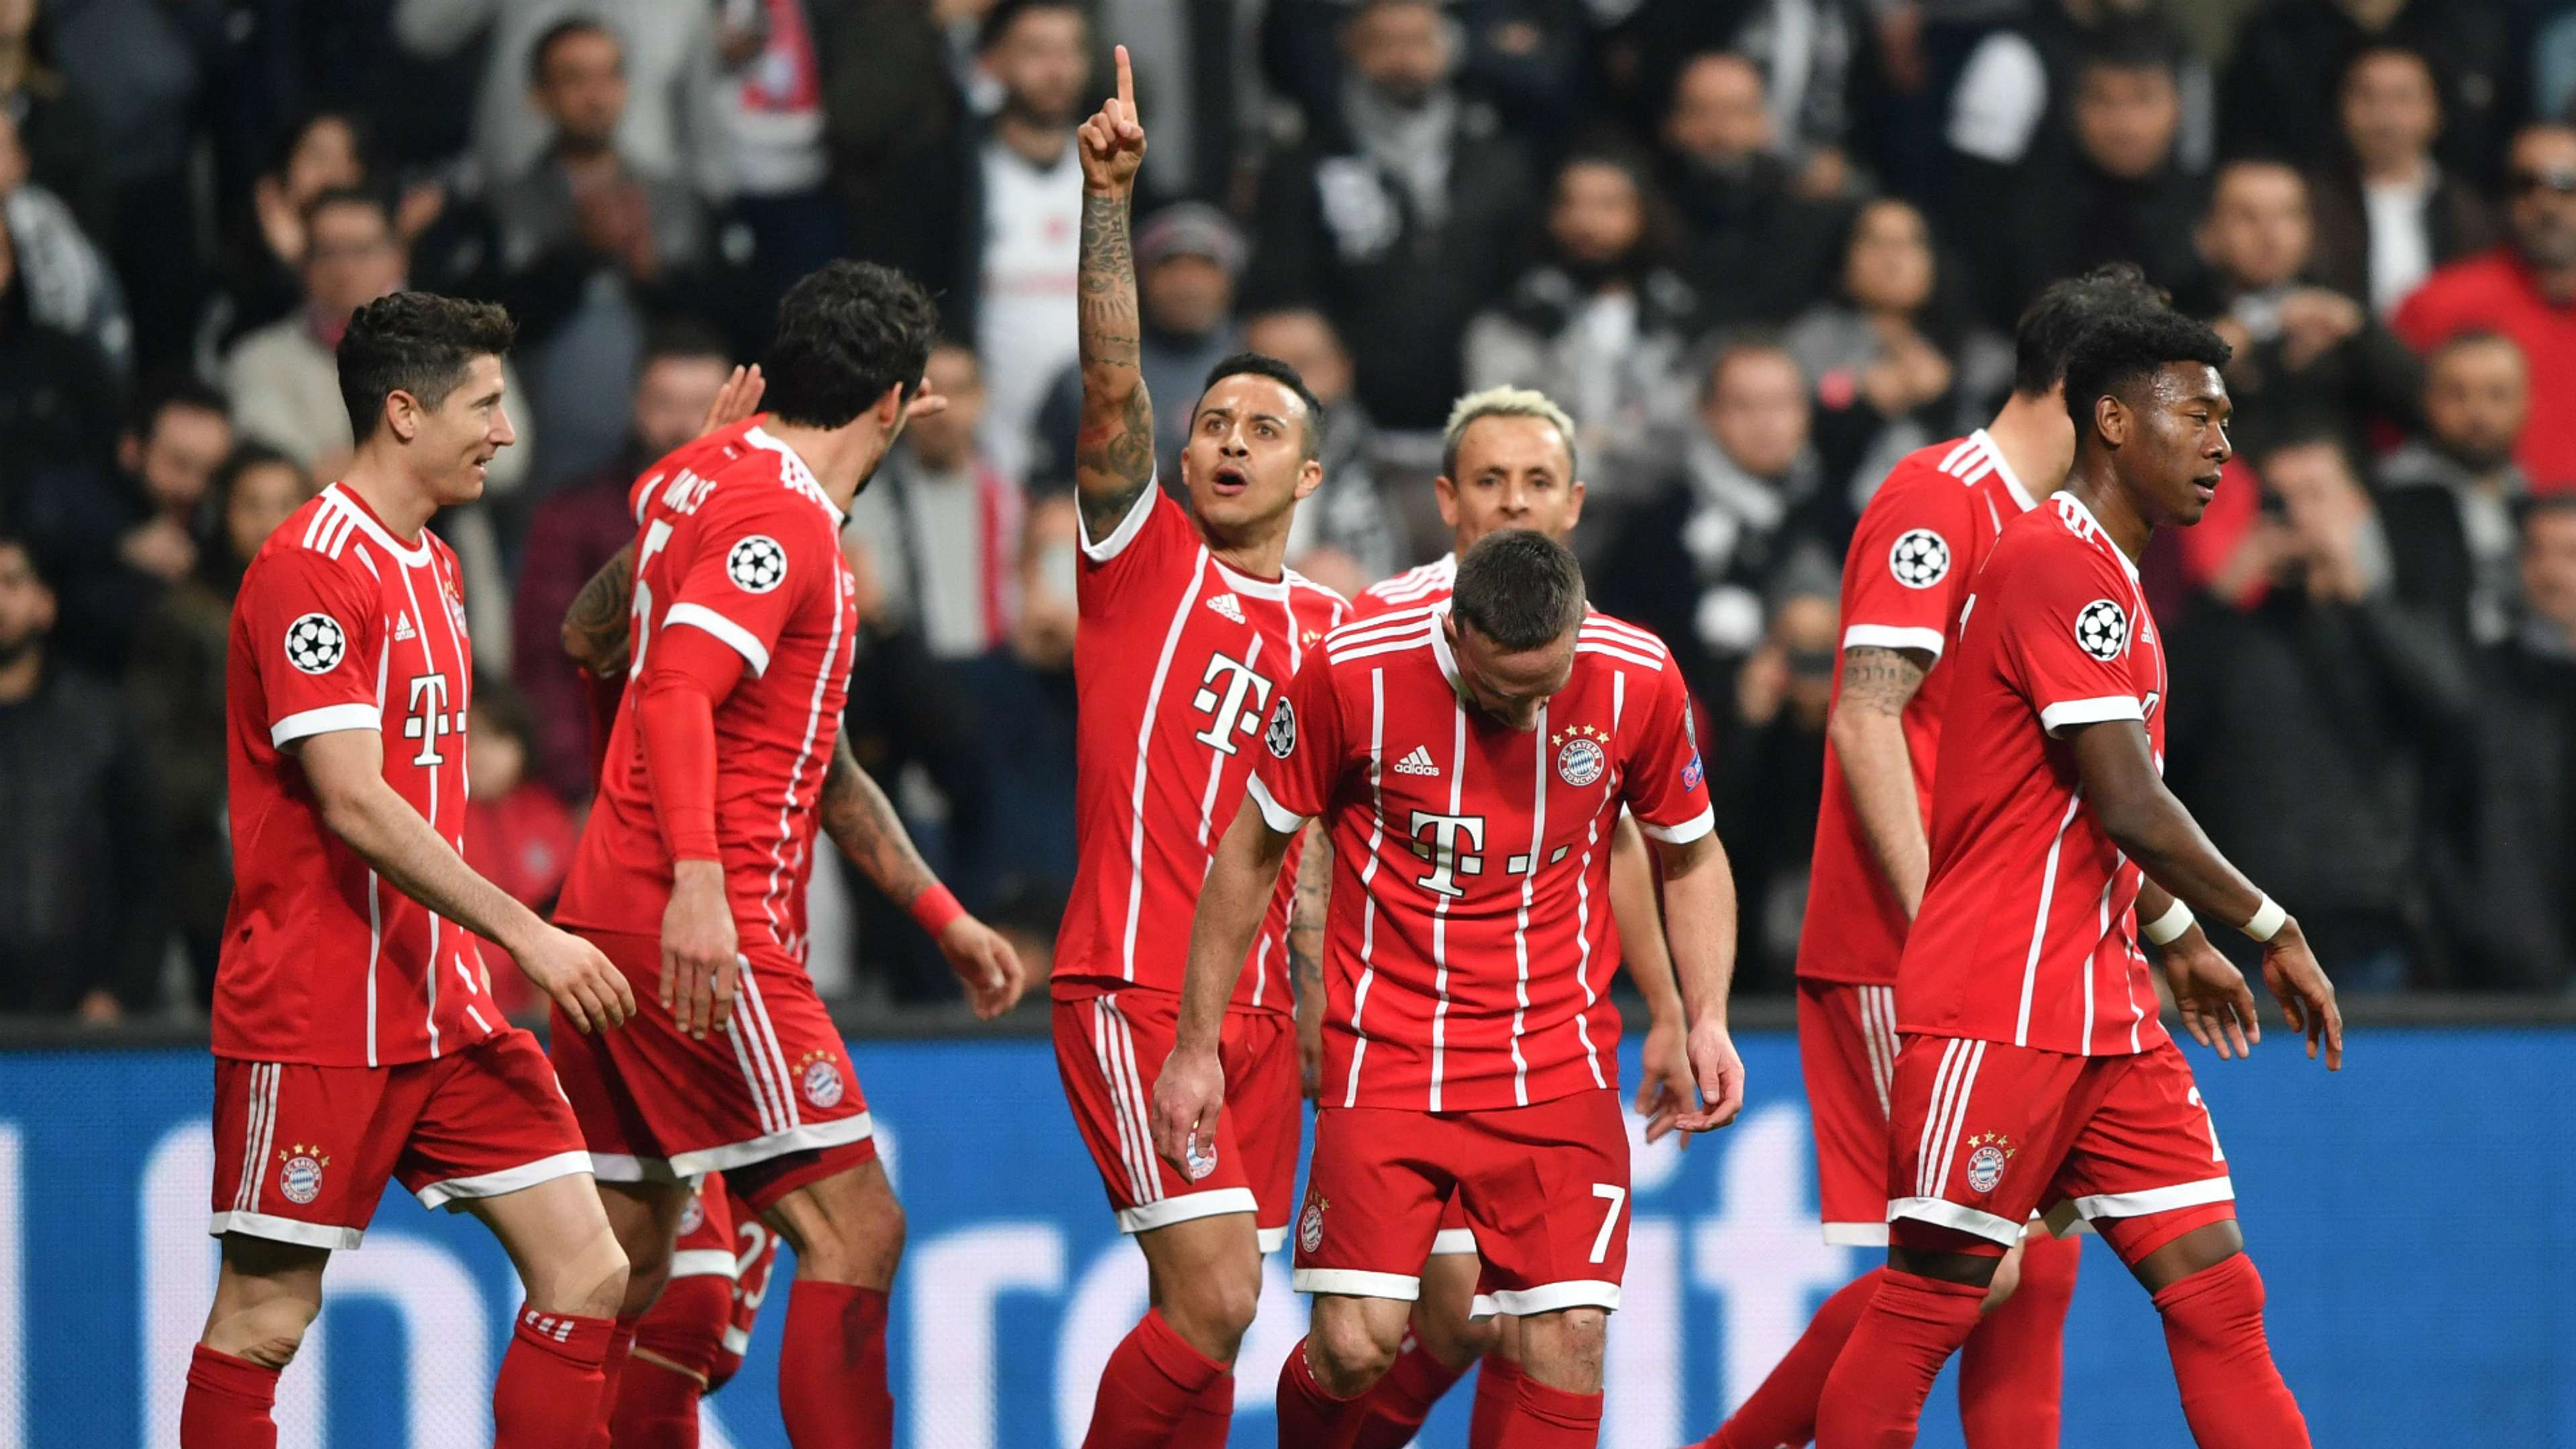 Thiago Bayern Munich goal celebration vs Besiktas UCL 03142018